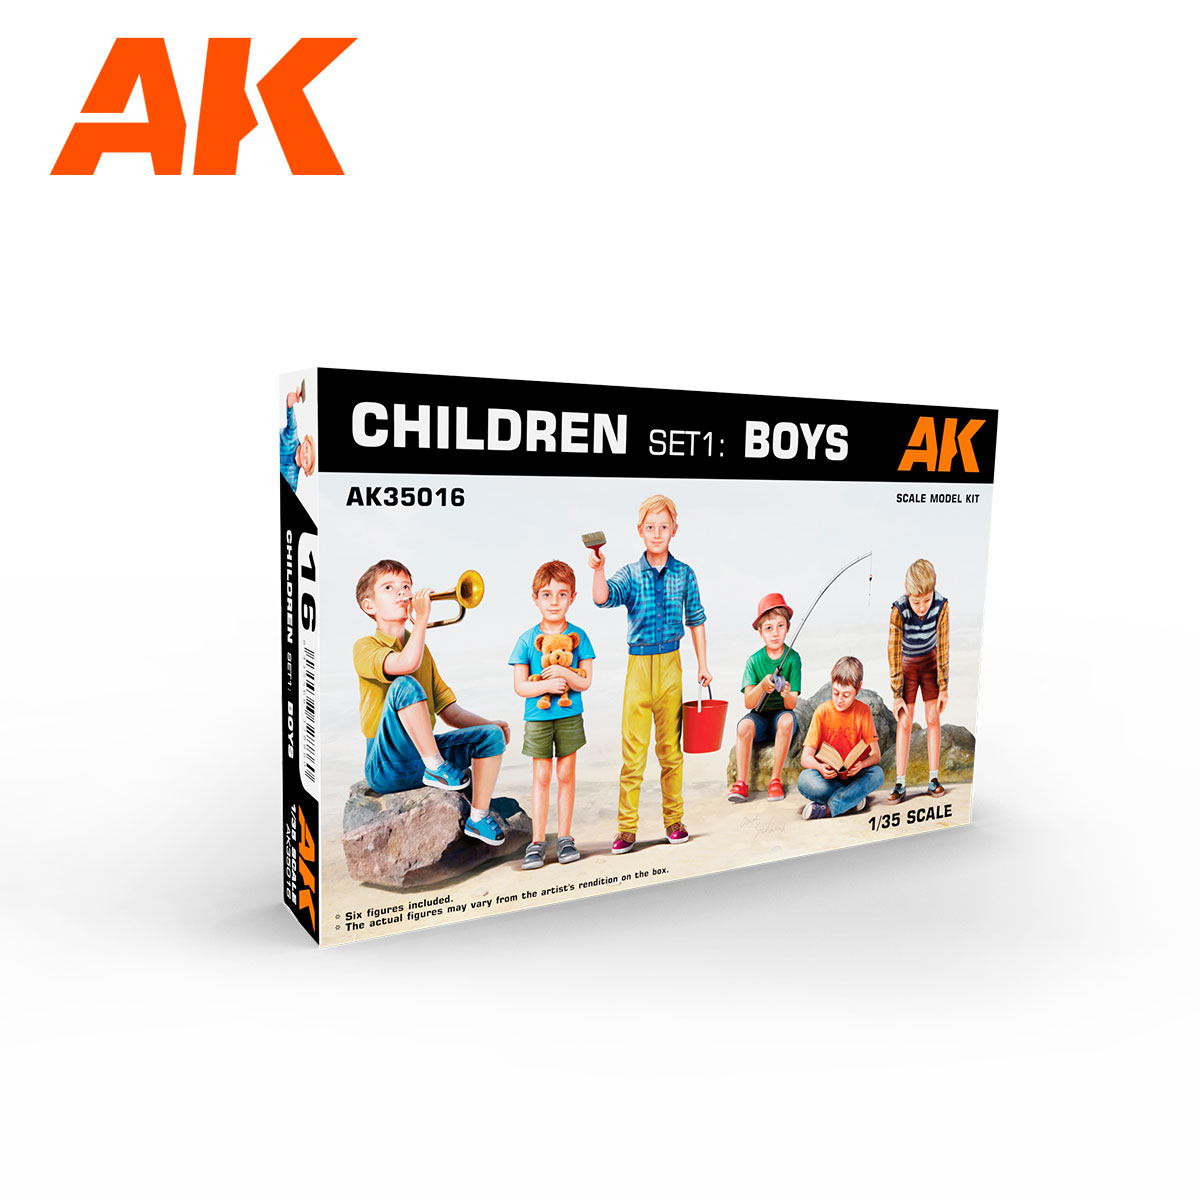 Children Set 1: Boys